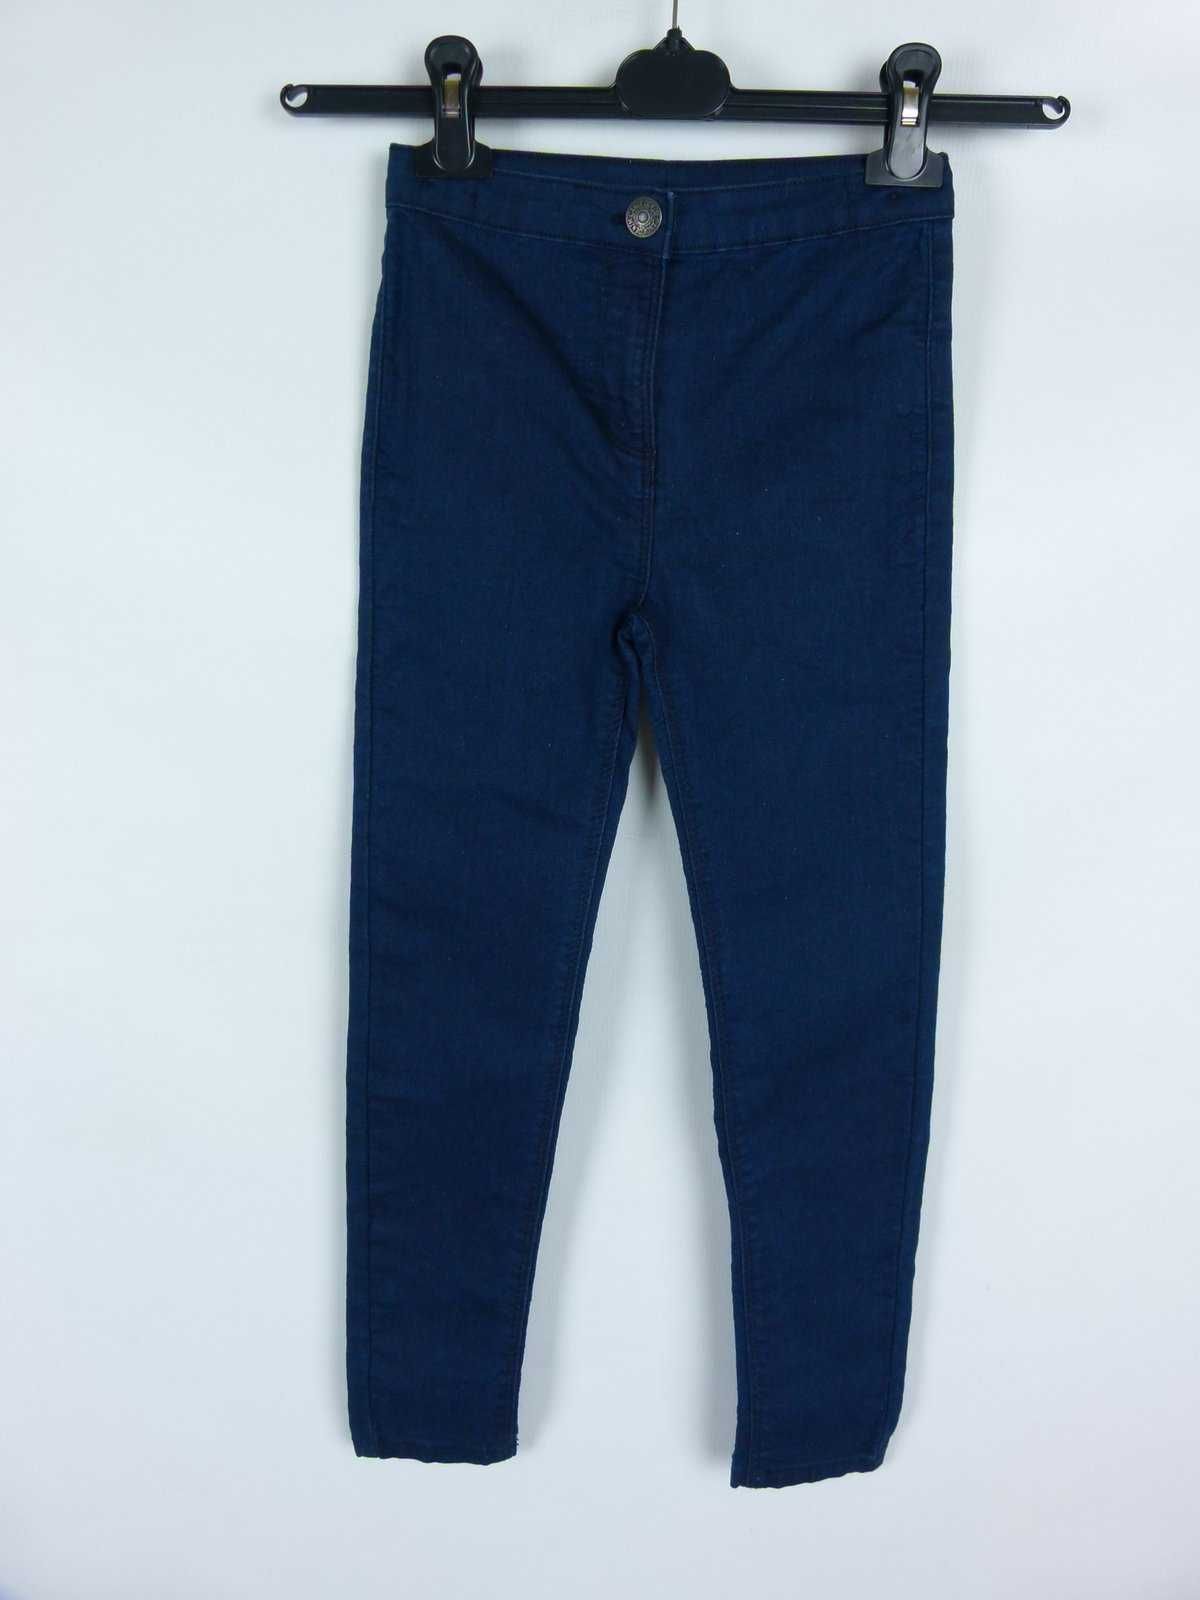 Candy Couture spodnie jeans 9 lat / 134 cm